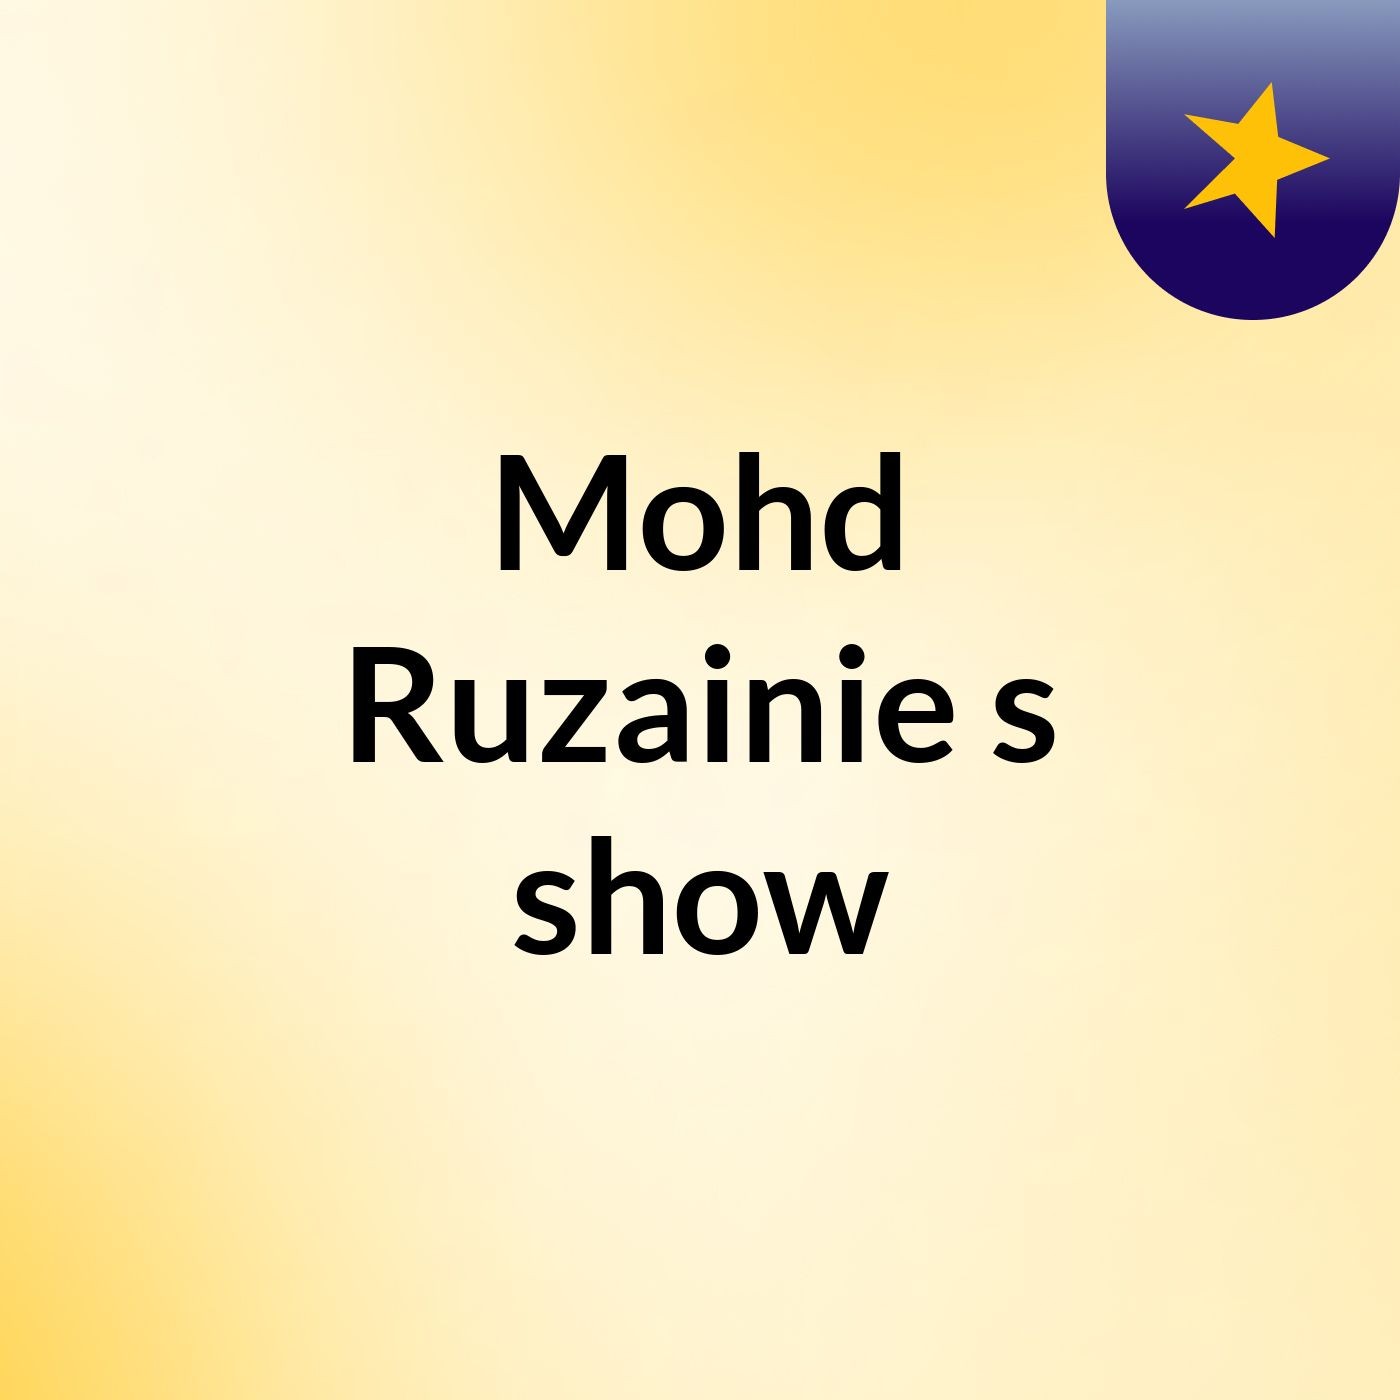 Mohd Ruzainie's show